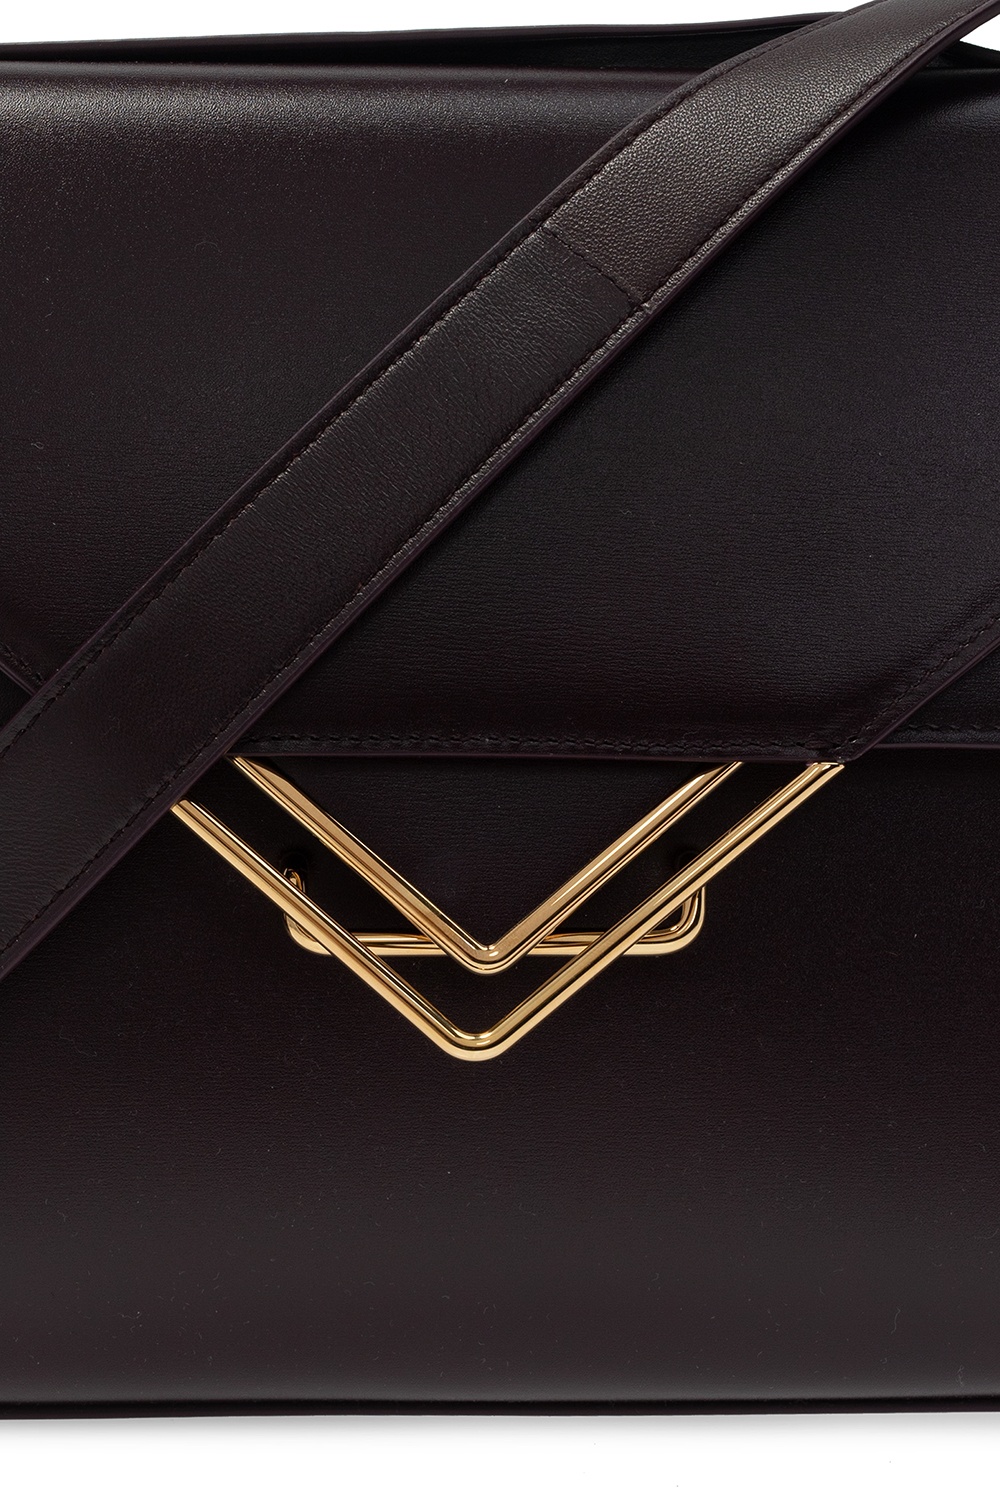 Bottega Veneta ‘The Clip’ shoulder bag